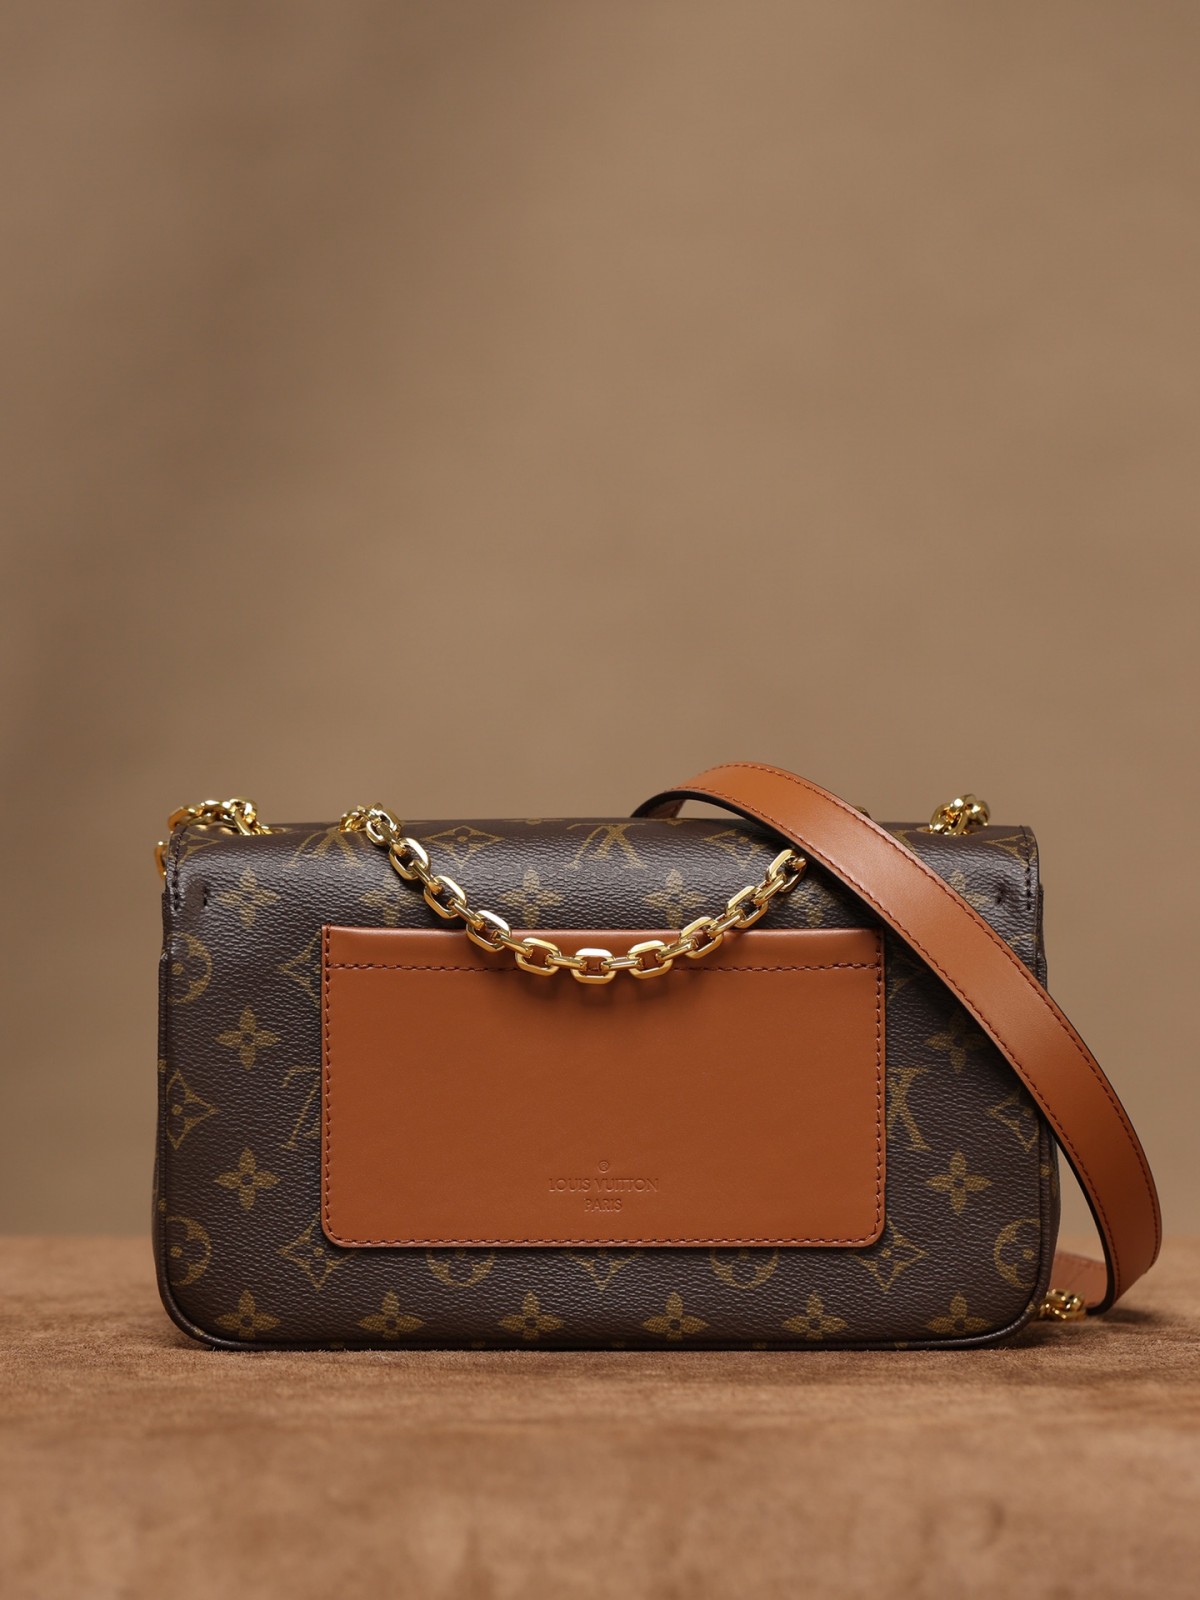 LV Marceau Bag Replication: Shebag Company’s Excellence（2023 Week 43）-Paras laatu väärennetty Louis Vuitton laukku verkkokauppa, replika suunnittelija laukku ru